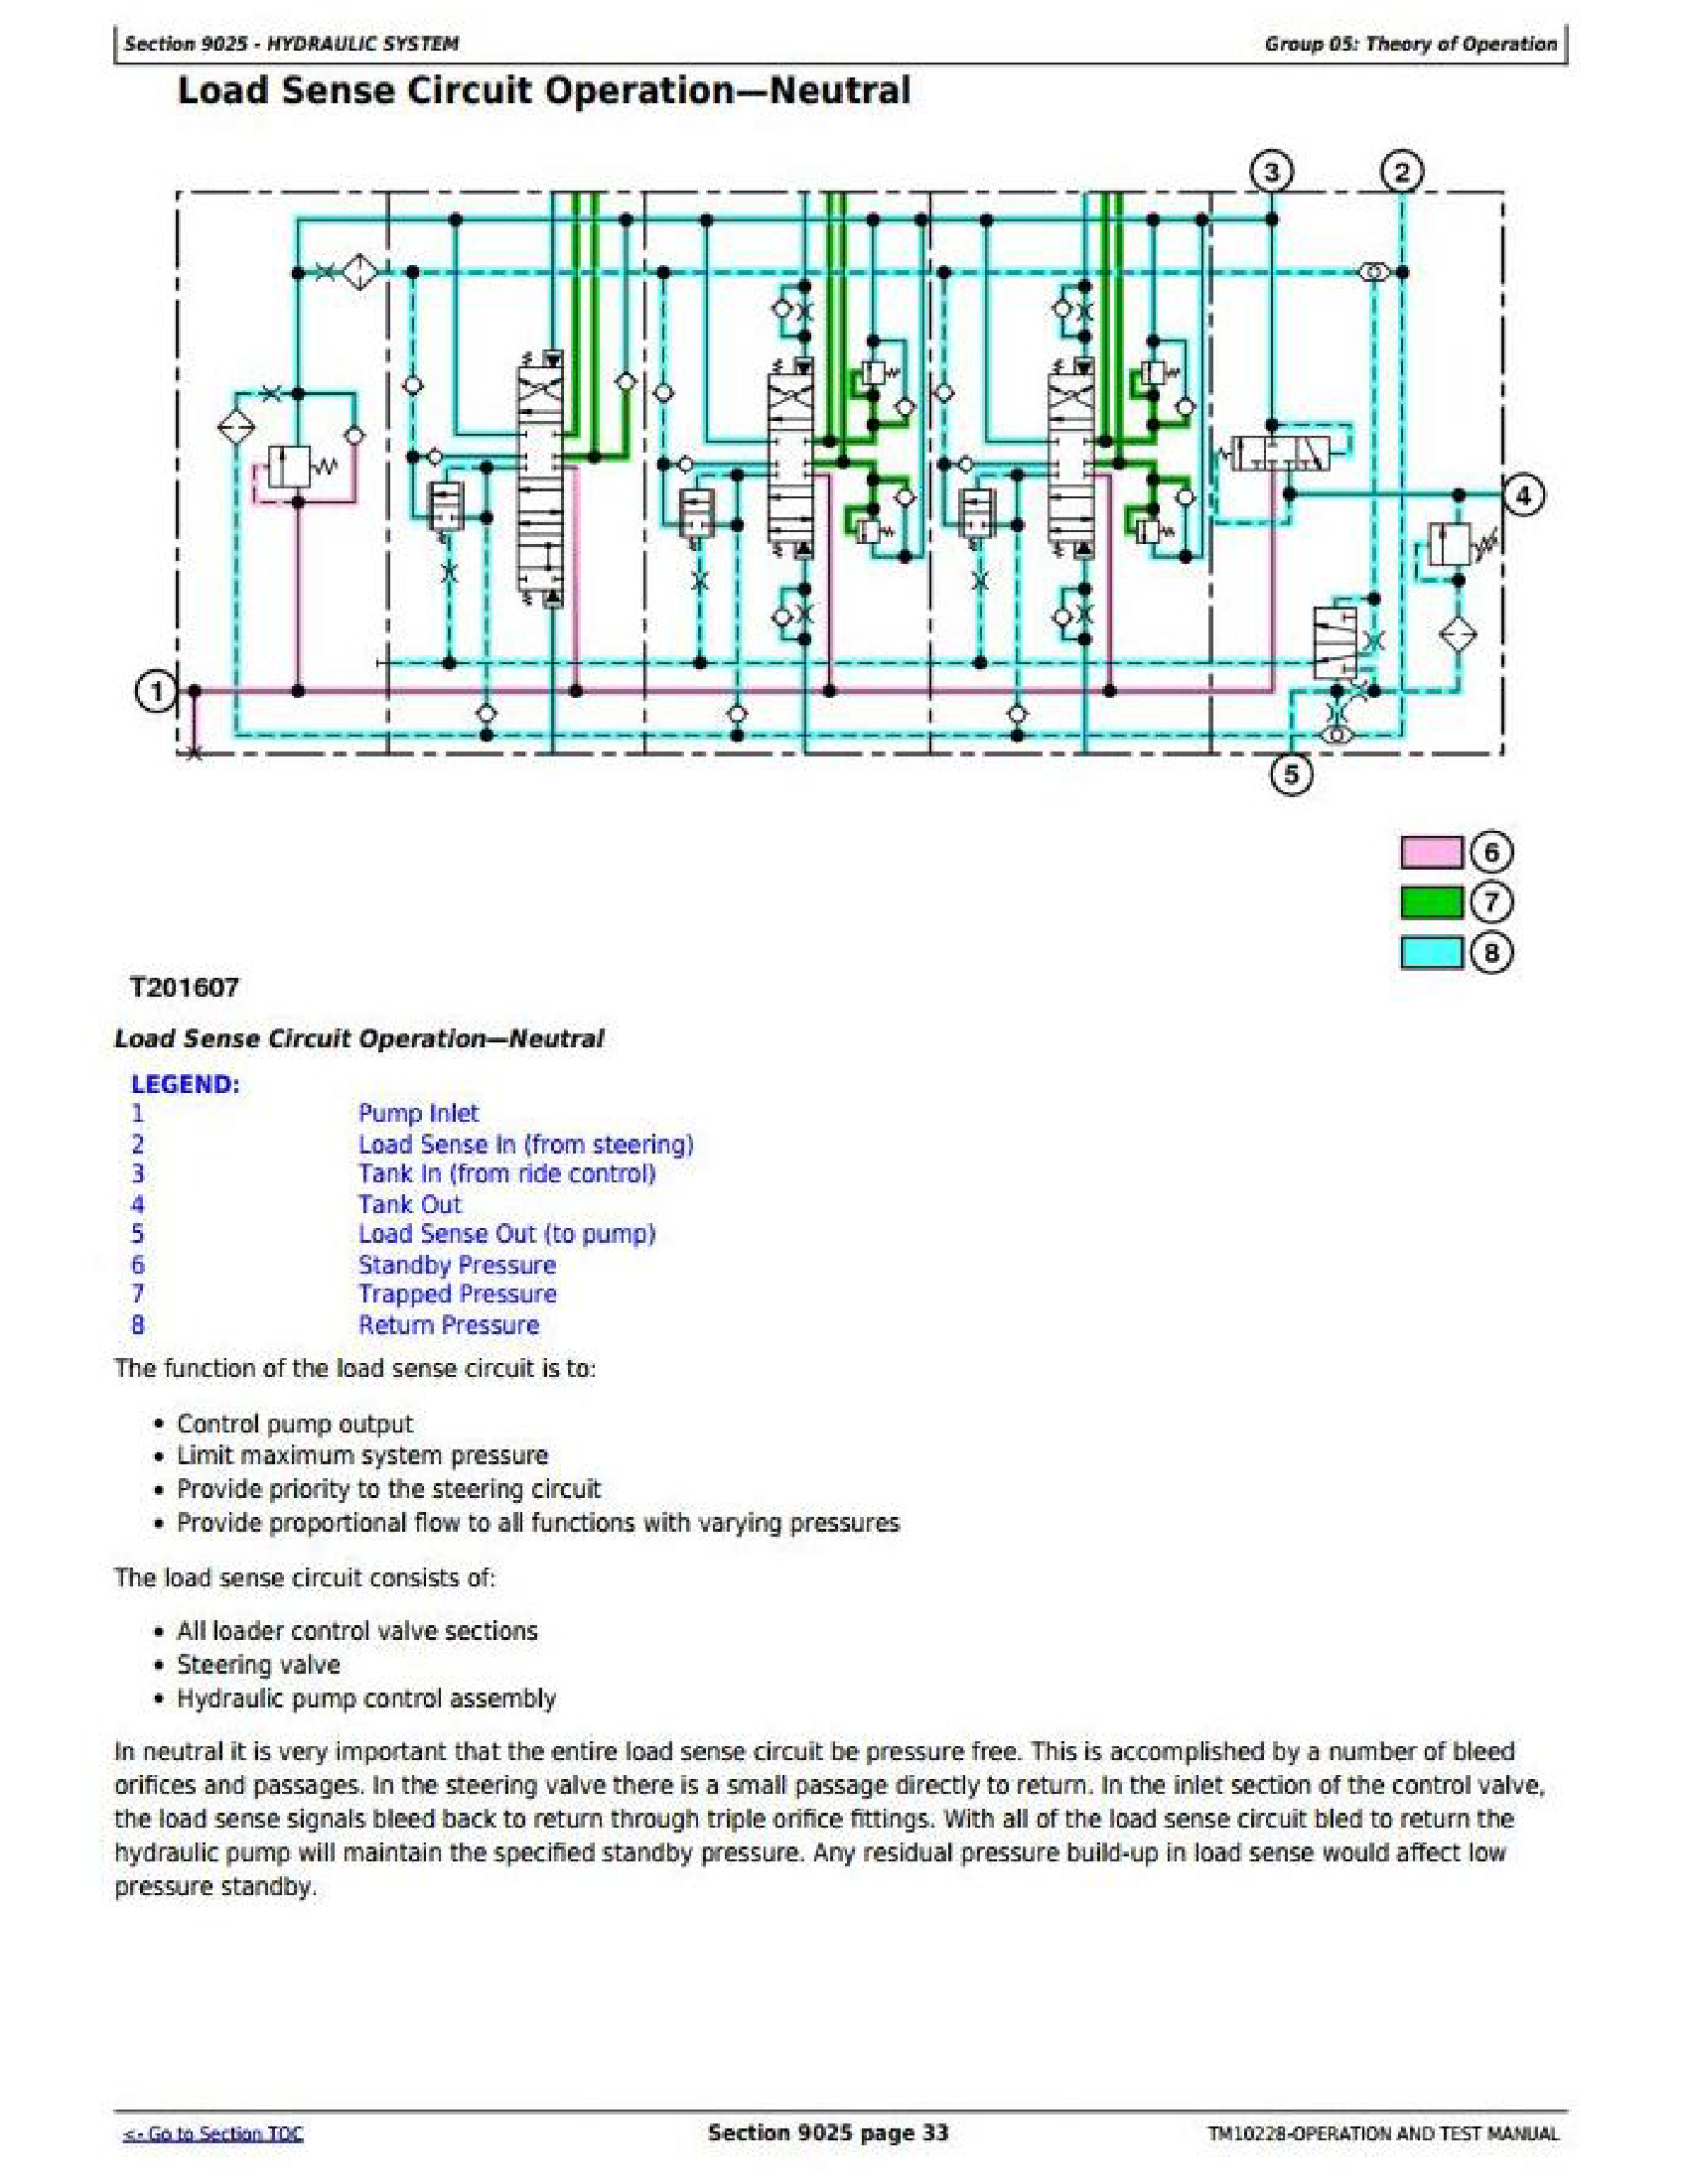 John Deere 1T0332G manual pdf